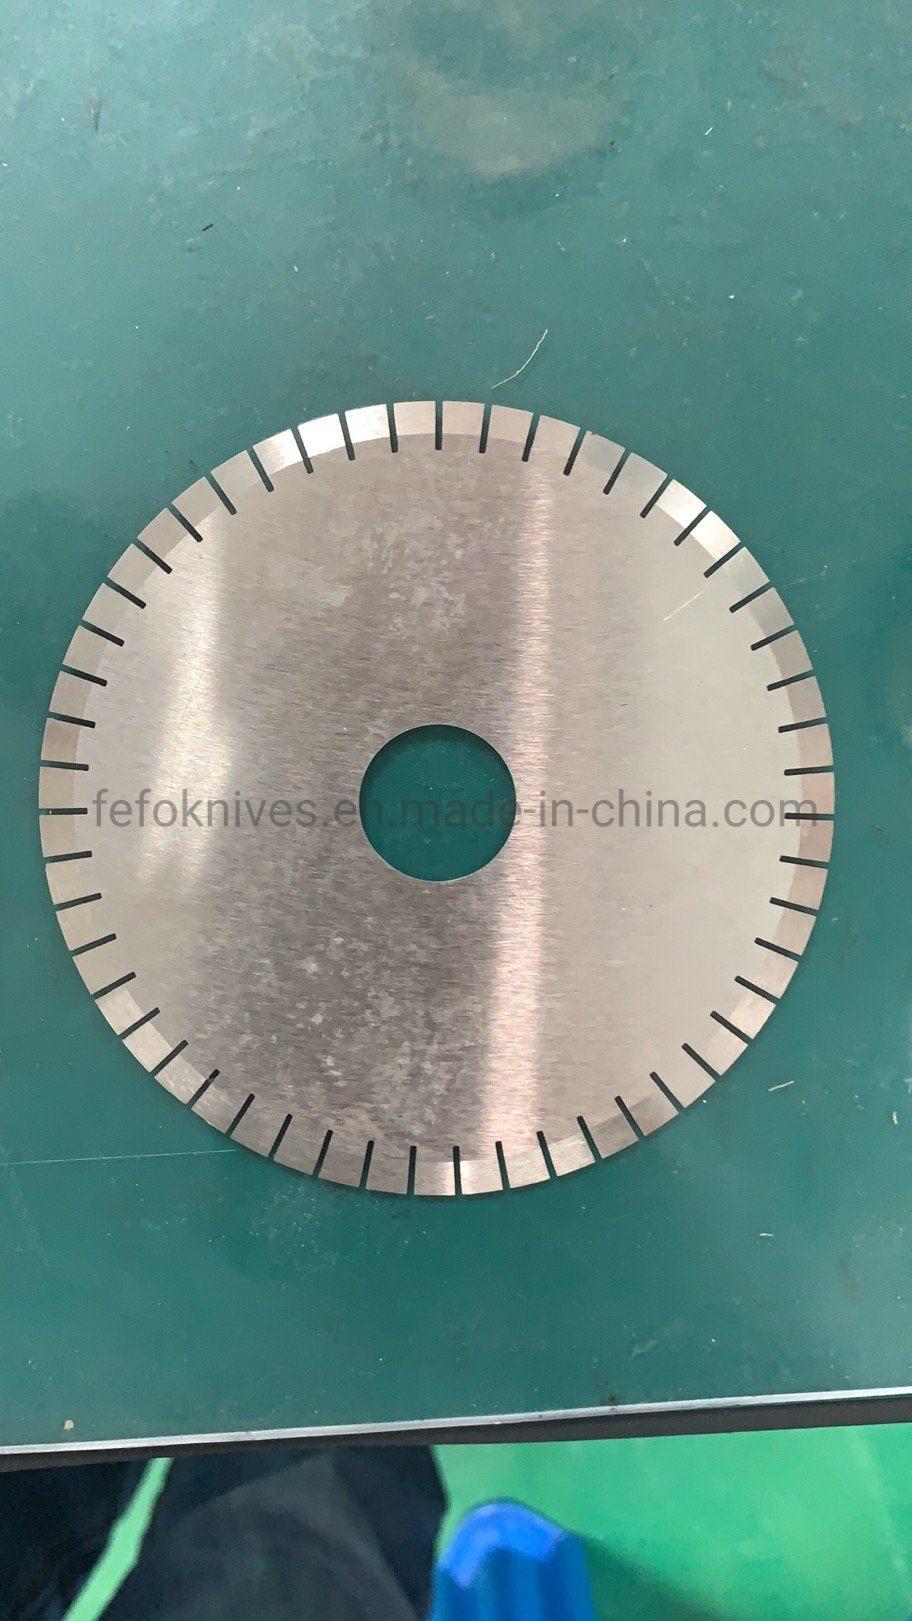 Thin Circular Cutter Blades for Cutting Film Masking Tape Slitter